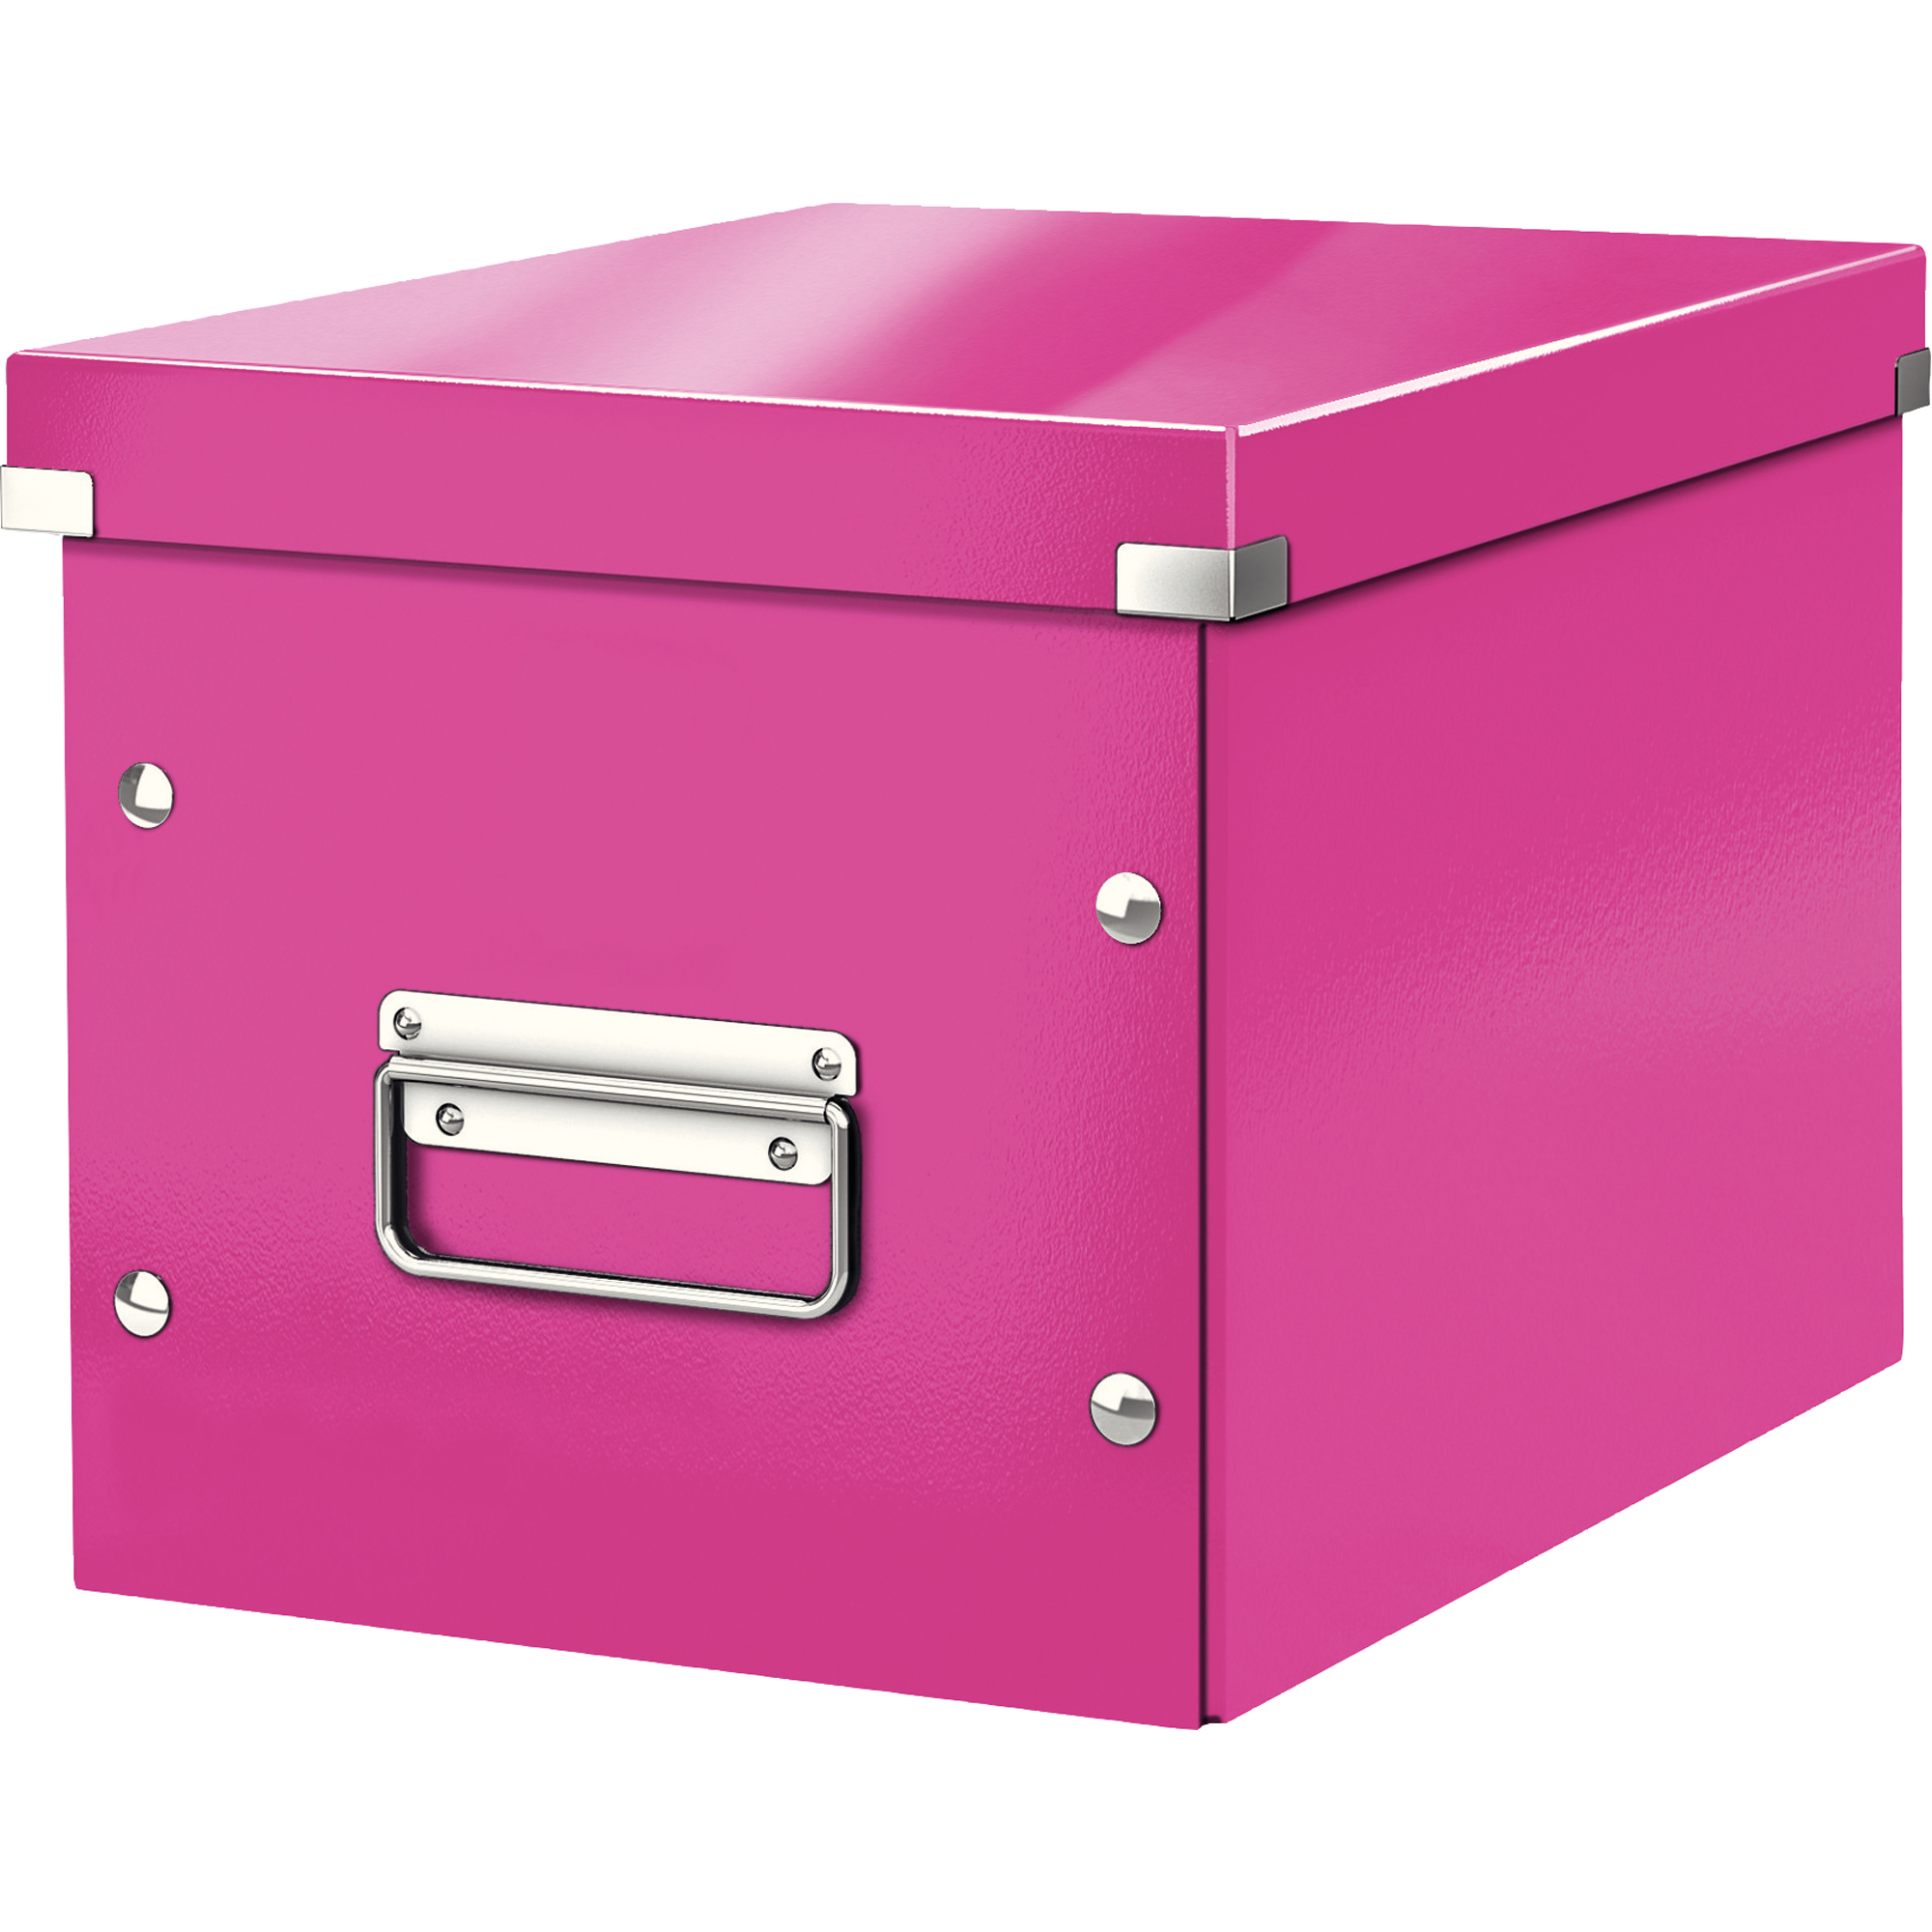 Leitz Archivbox Click & Store Cube 26 x 24 x 26 cm ohne Archivdruck pink